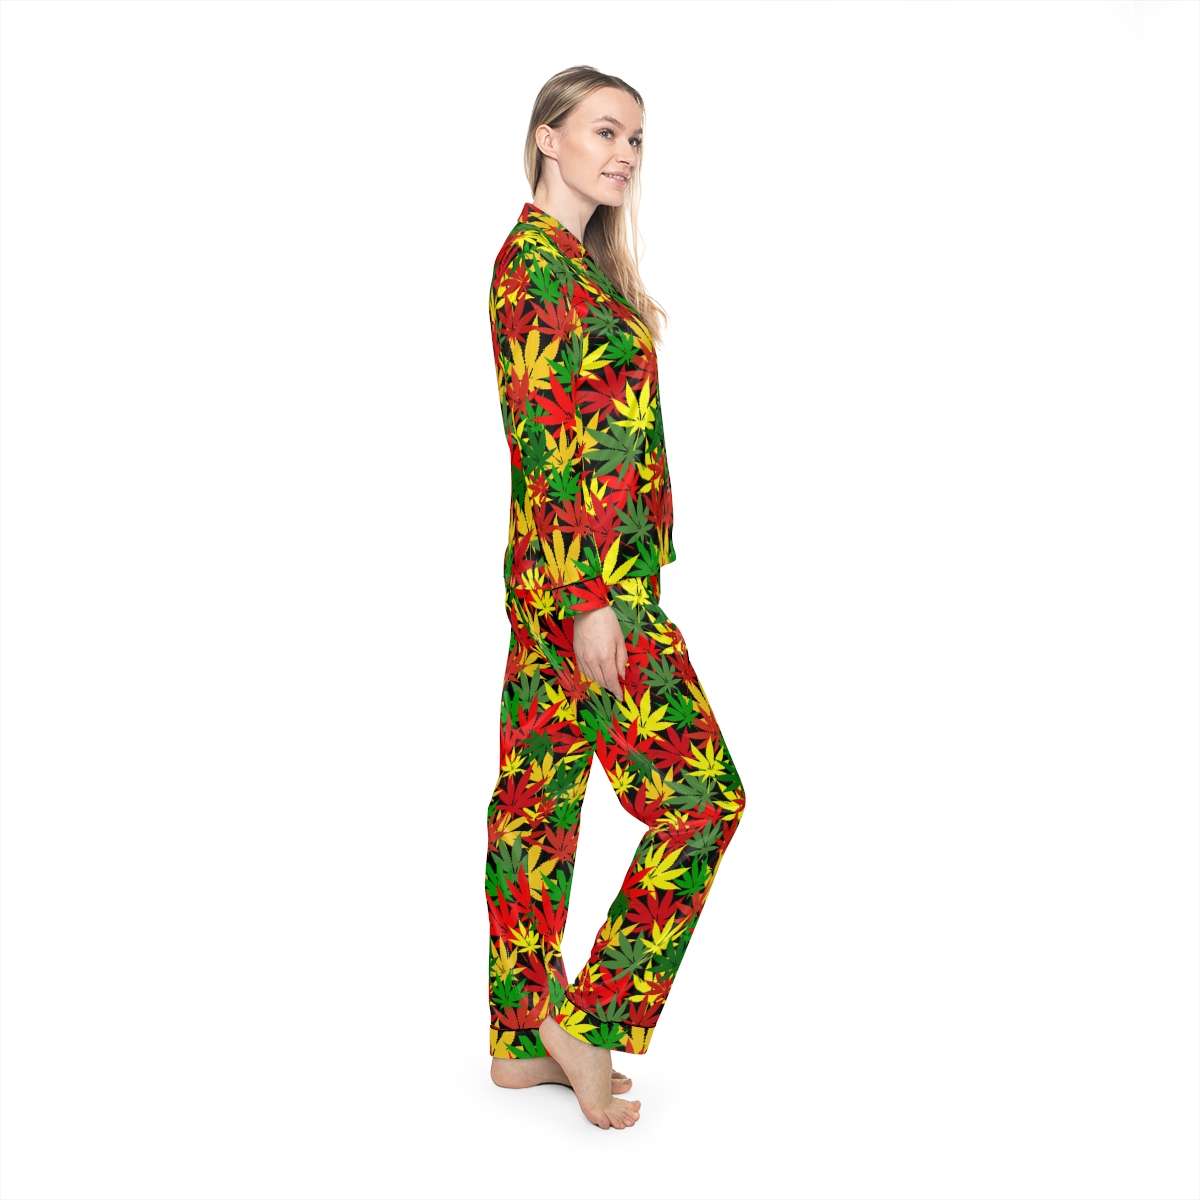 Rasta Hemp Satin Pajamas right side model view with a hemp leaf pattern in the Rastafarian colors. Soft silky and vivid colors. Original Rasta wear at Rastaseed.com